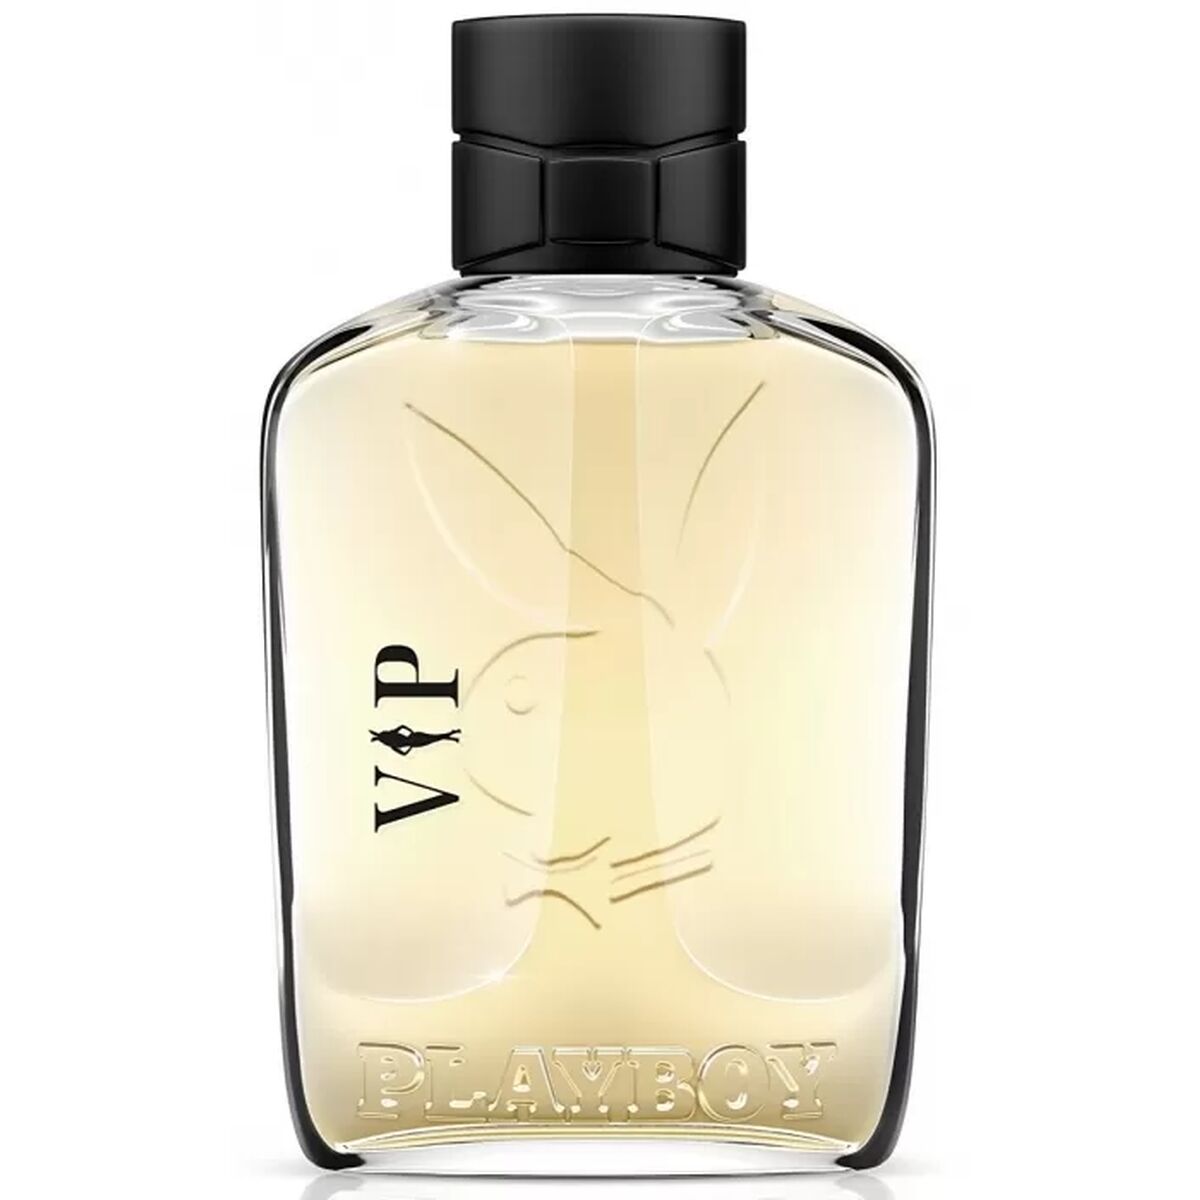 Parfum Homme Playboy EDT VIP 100 ml